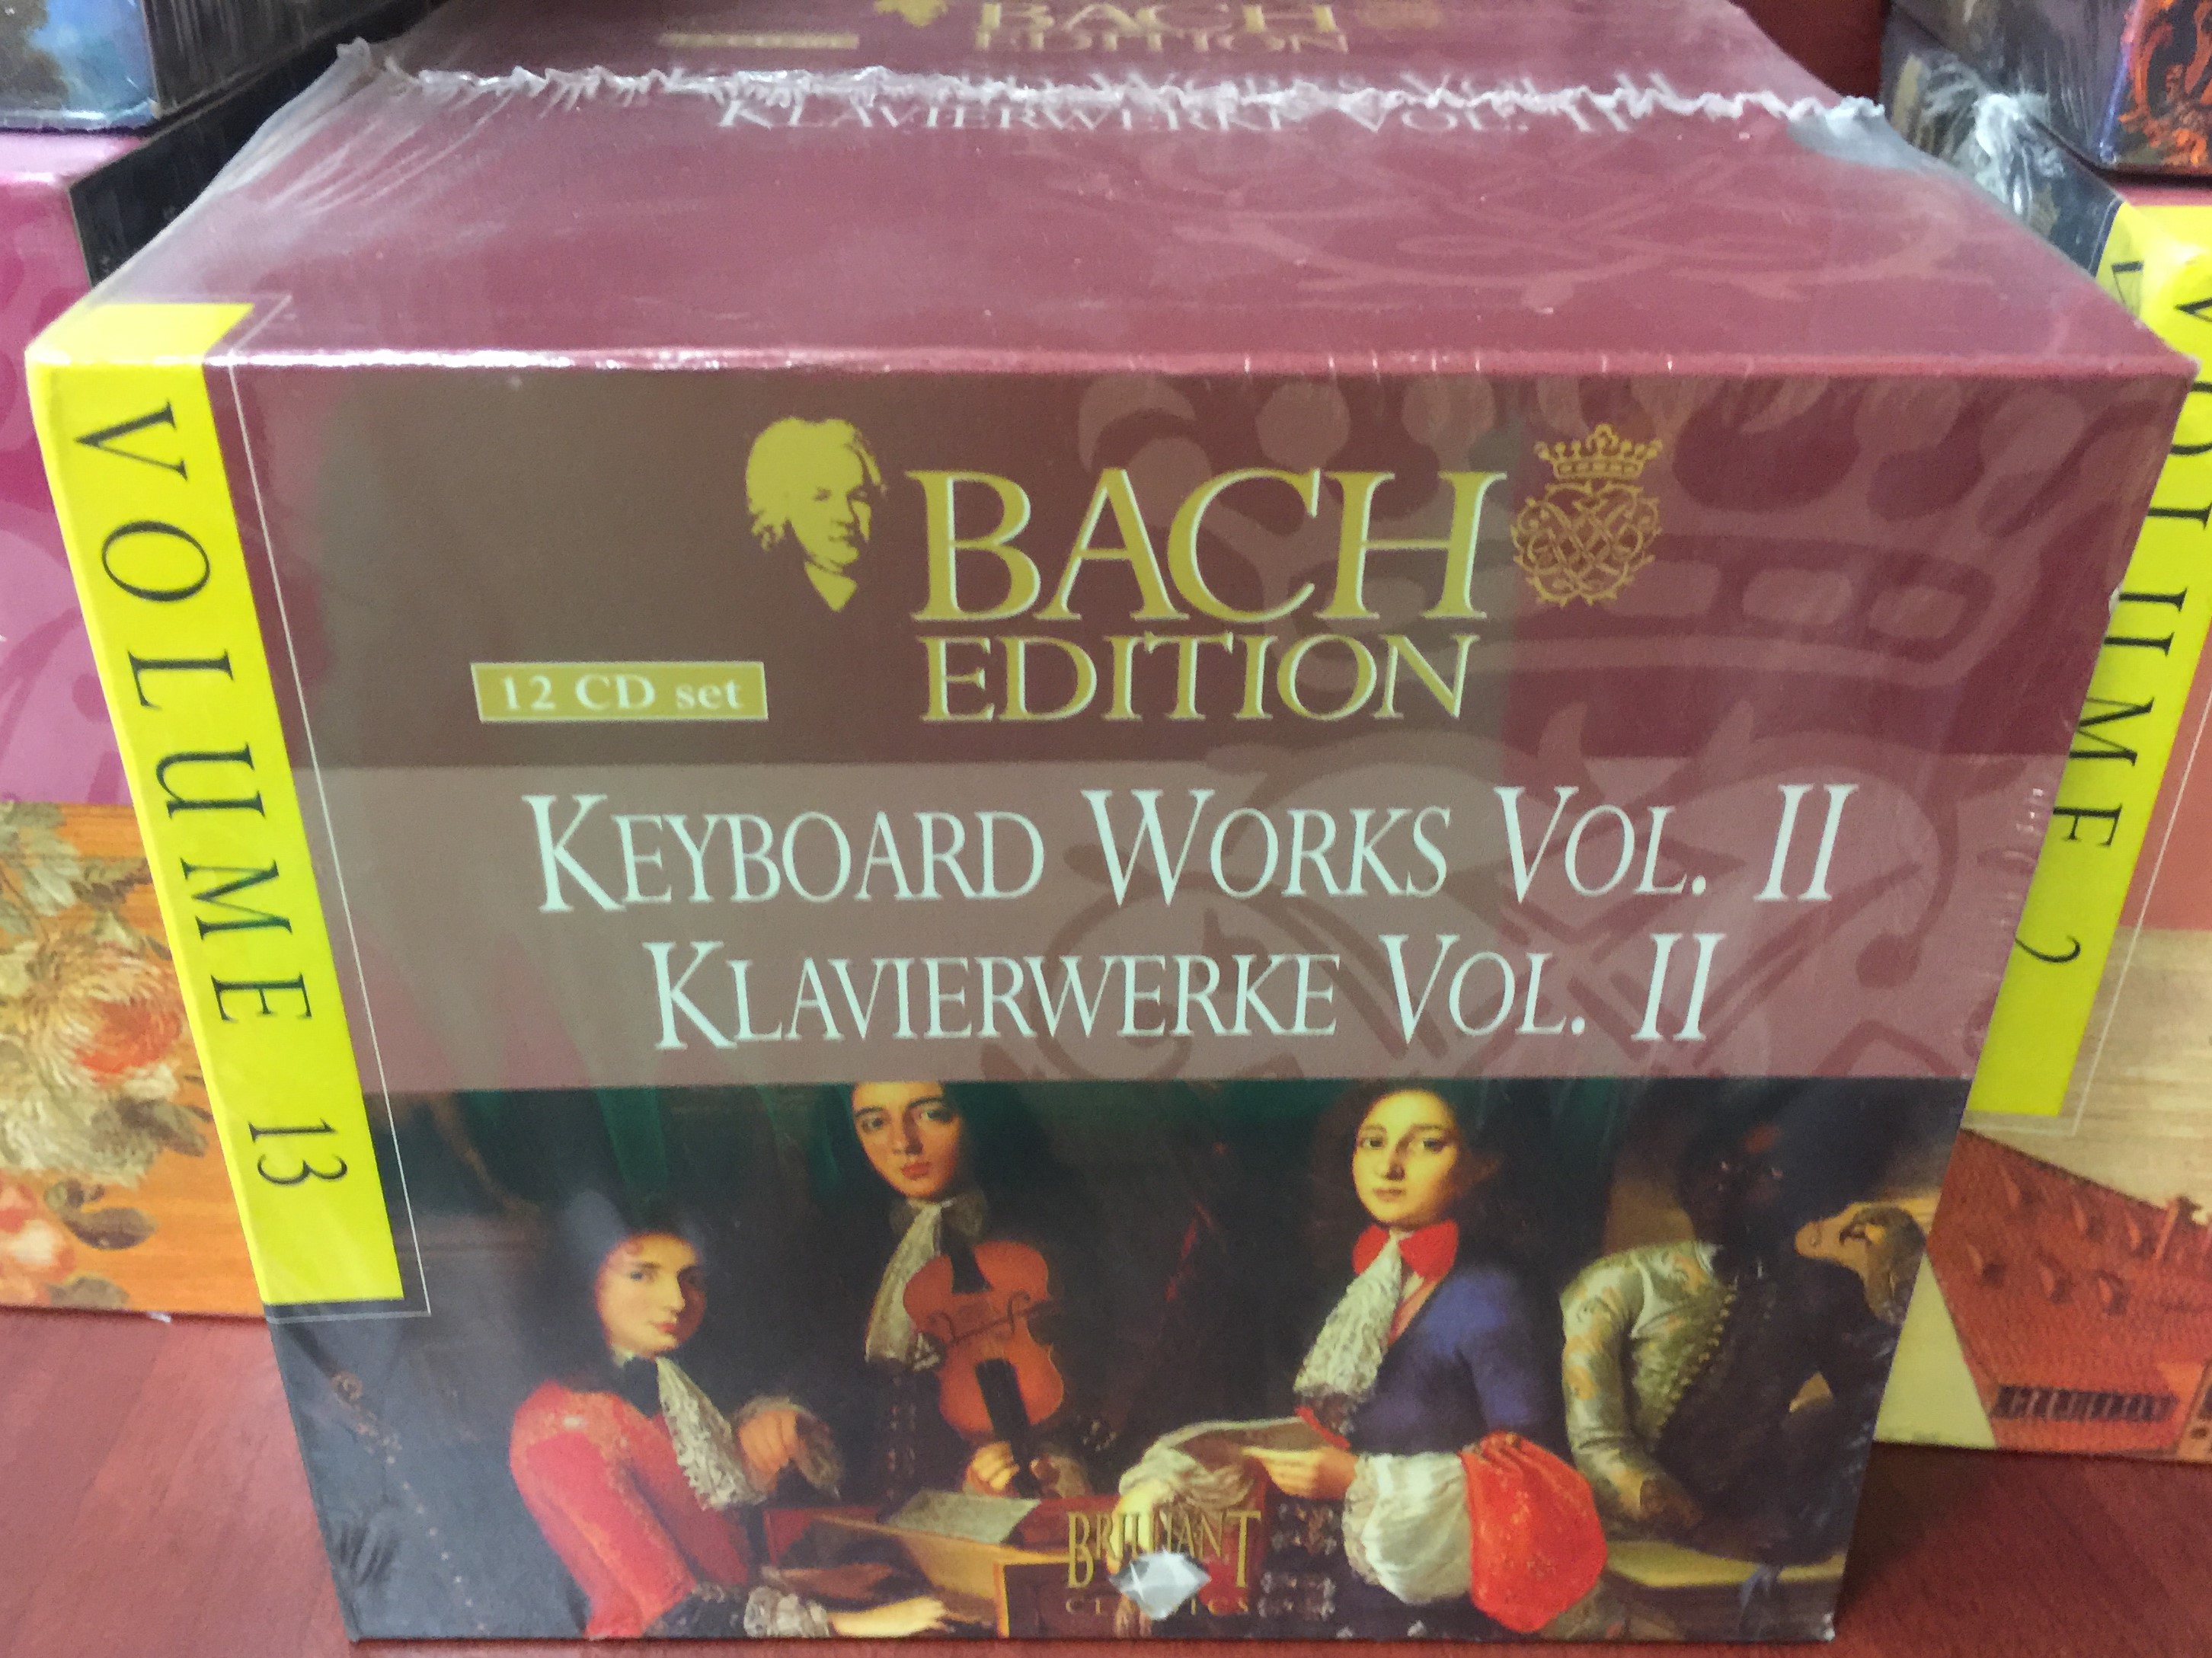 bach-edition-volume-13-keyboard-works-vol.-ii-klavierwerke-vol.-ii-brilliant-classics-12x-audio-cd-box-set-99372-1-.jpg